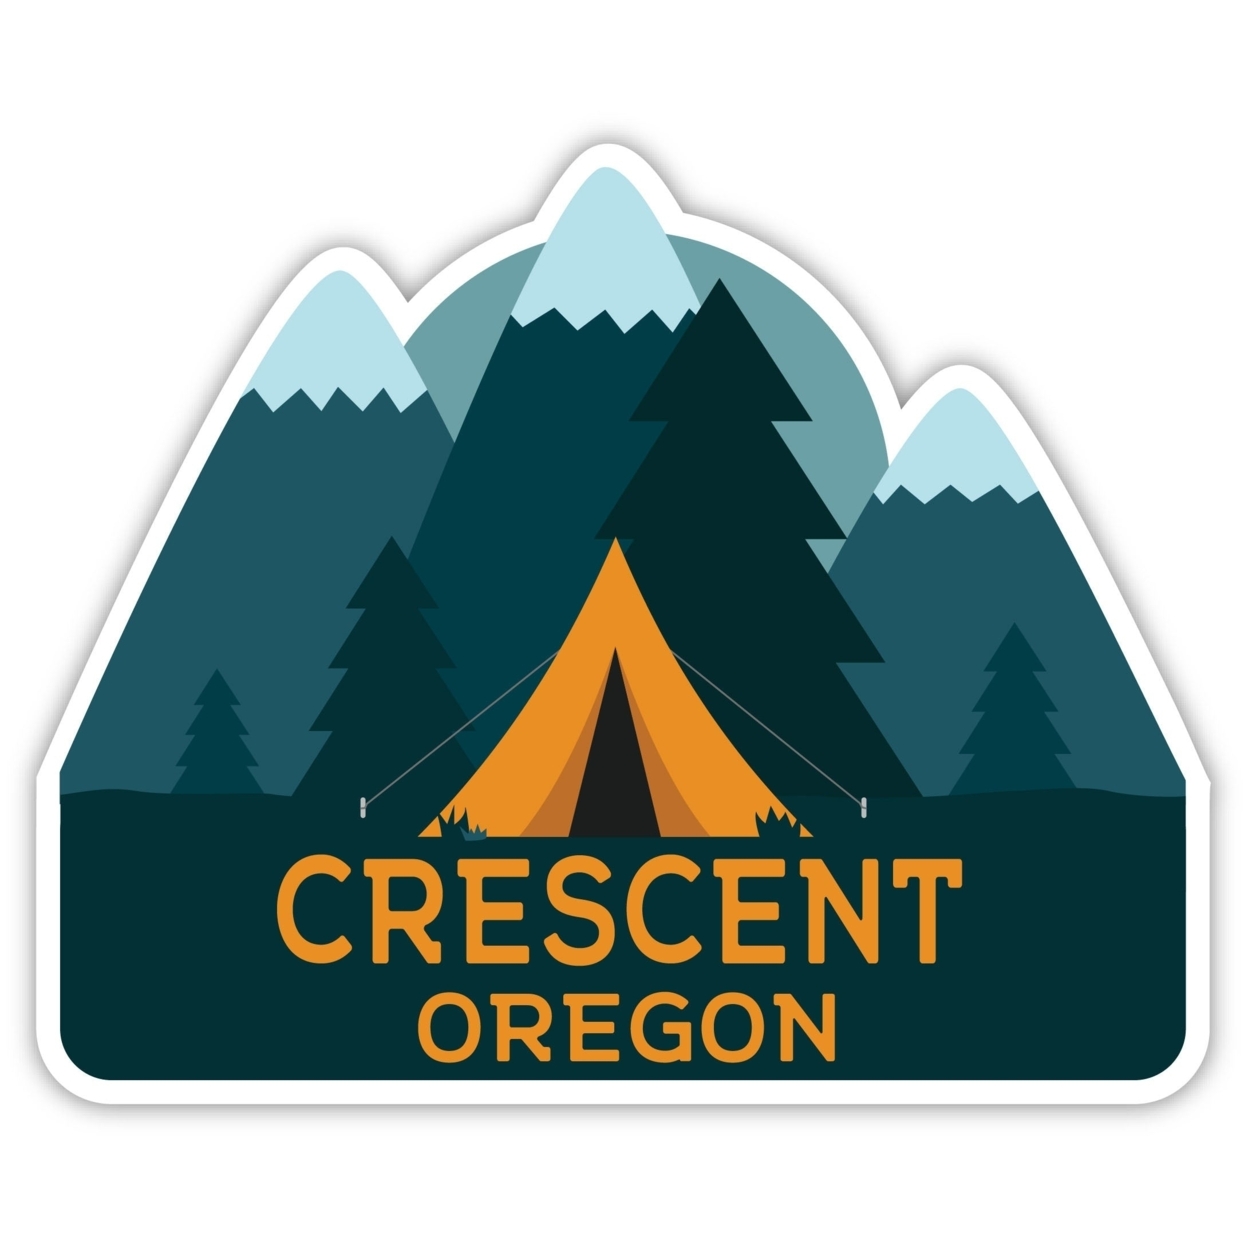 Crescent Oregon Souvenir Decorative Stickers (Choose Theme And Size) - 4-Pack, 4-Inch, Tent